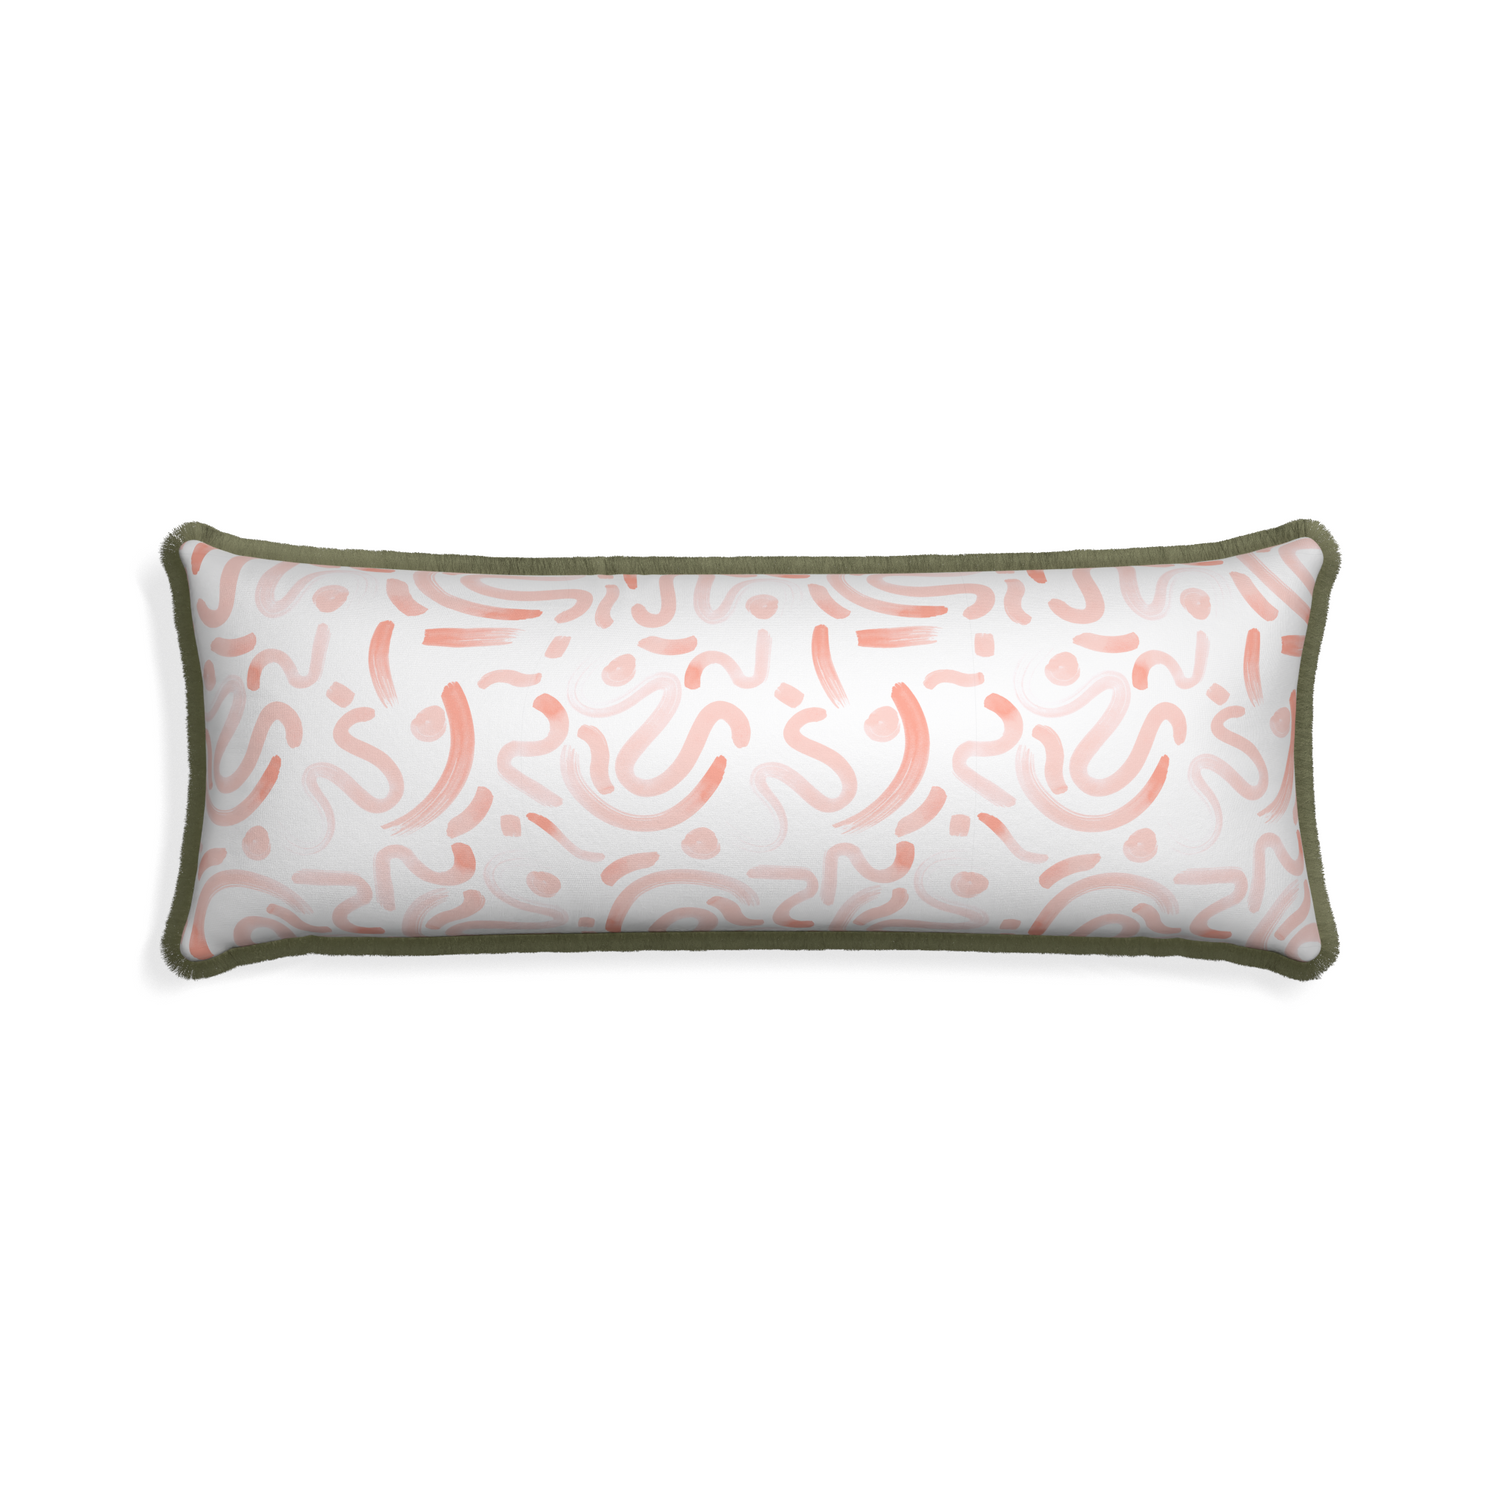 Xl-lumbar hockney pink custom pillow with sage fringe on white background